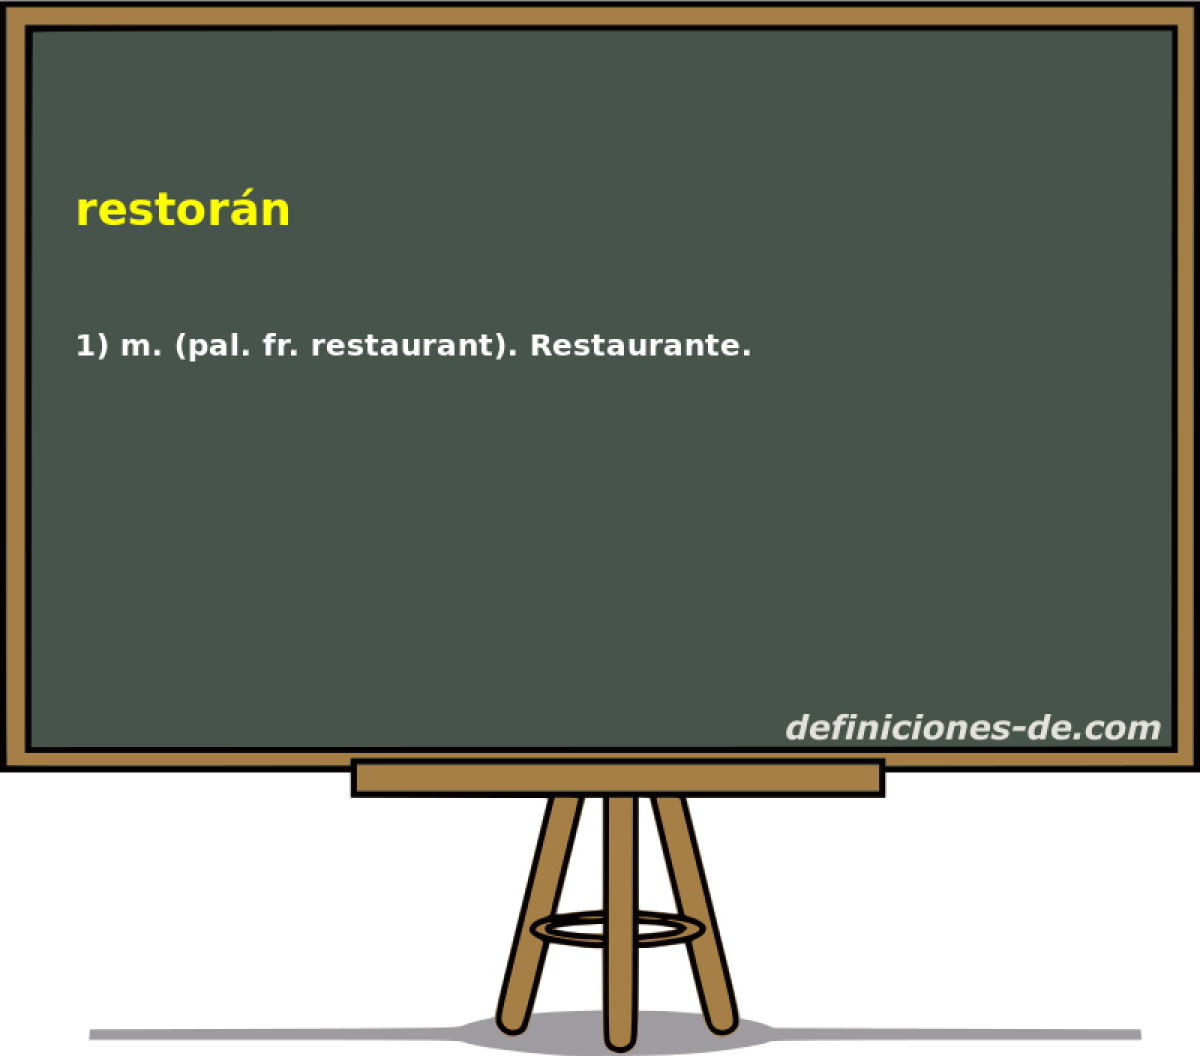 restorn 